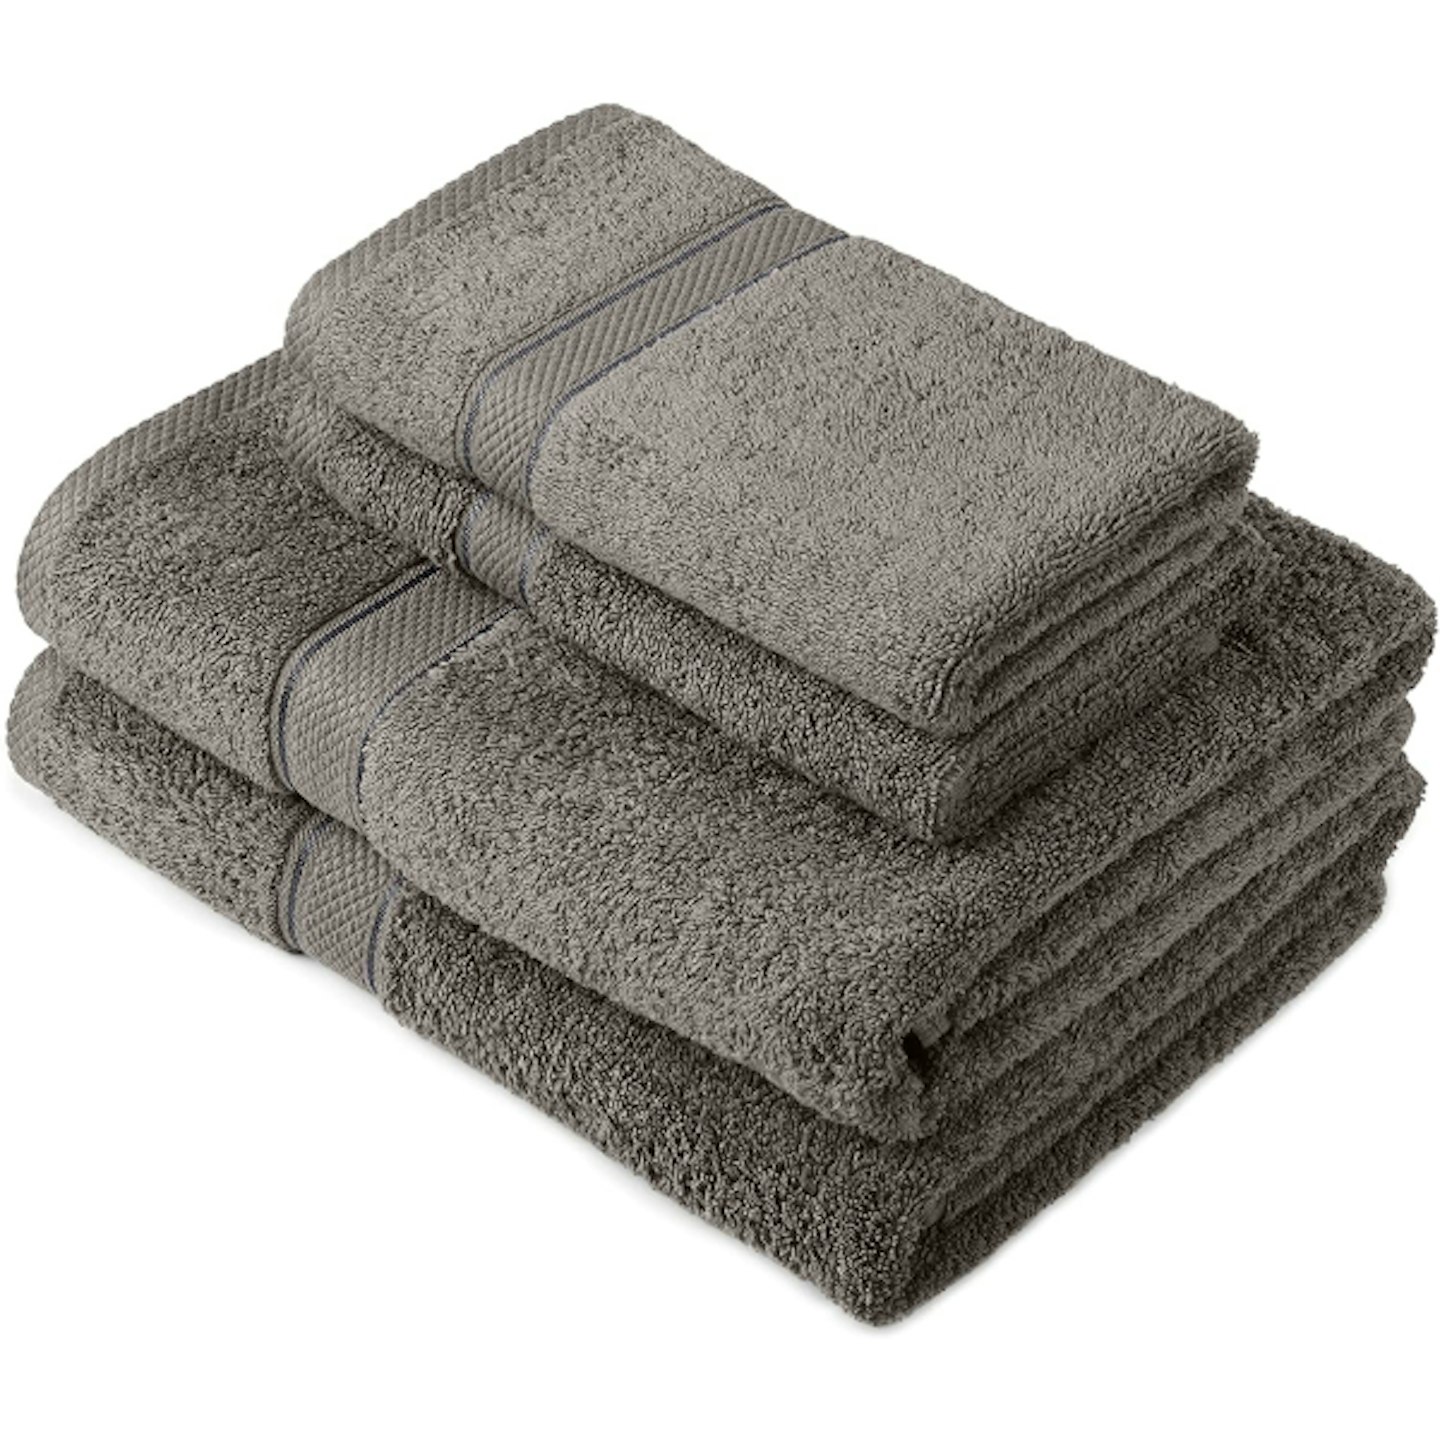 Grey Pinzon Towels Amazon